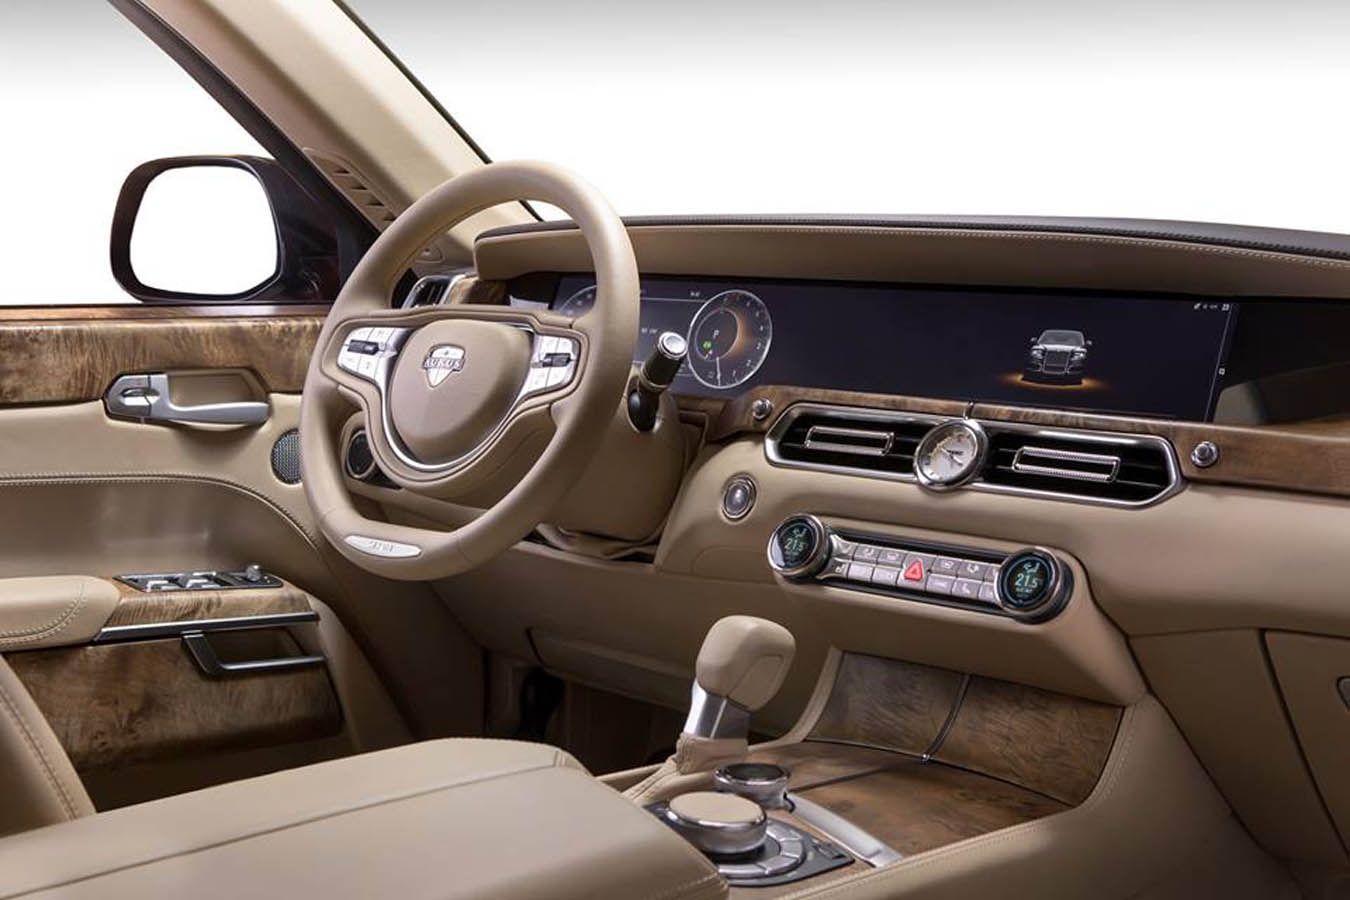 The all-new Urus Senat - a luxury Russian sedan to rival Bentley and Rolls-Royce